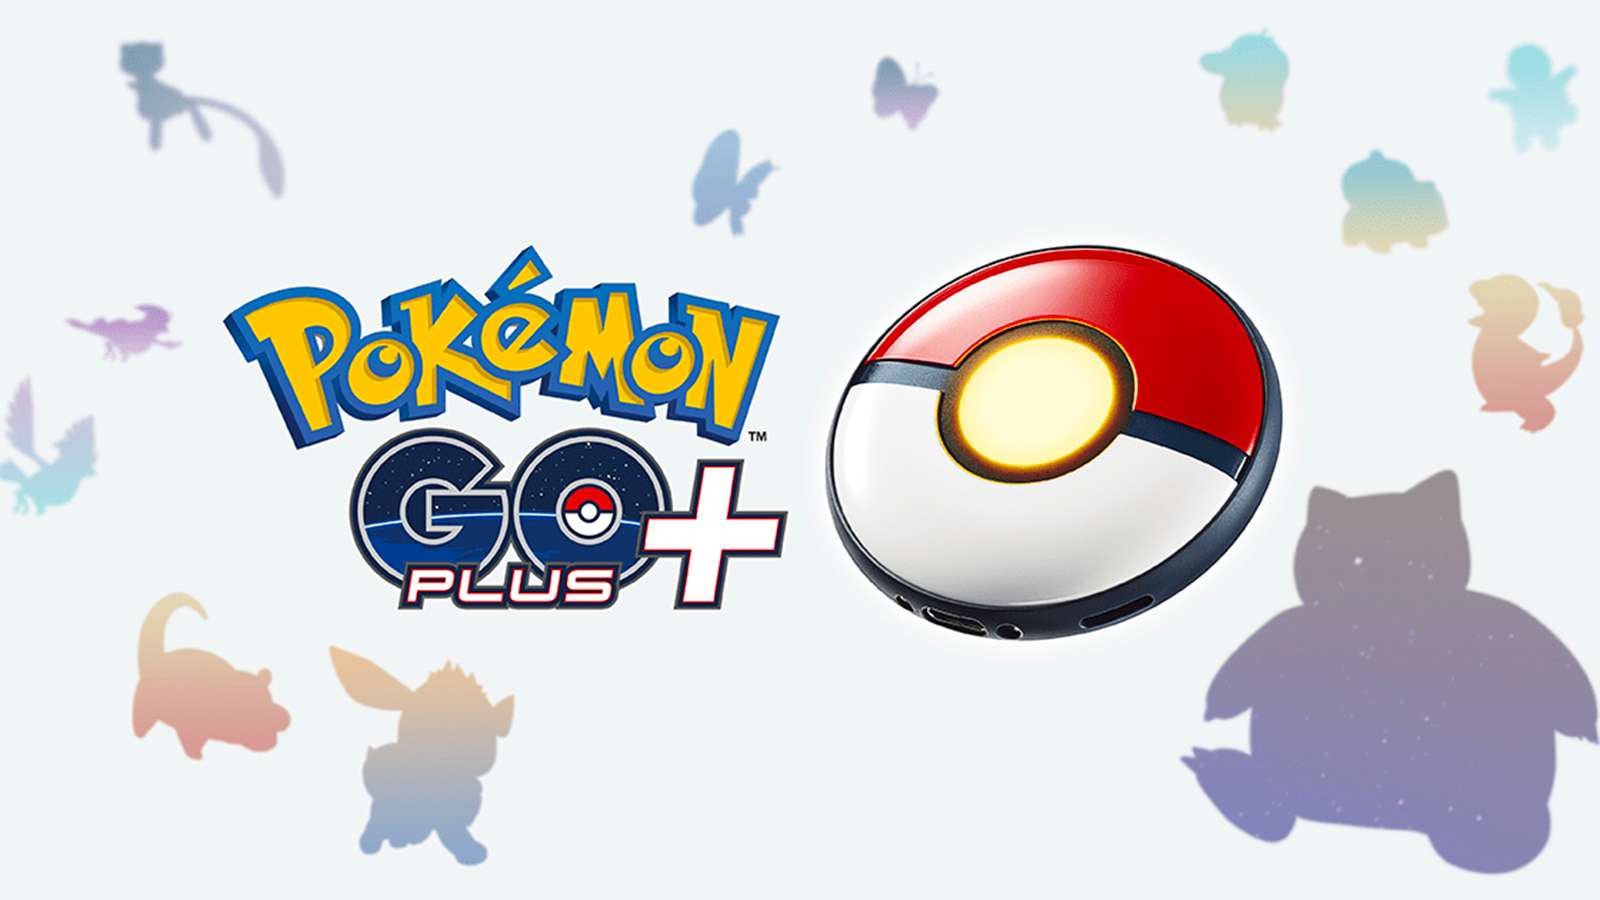 The Pokemon Go Plus+ device in Pokemon Go